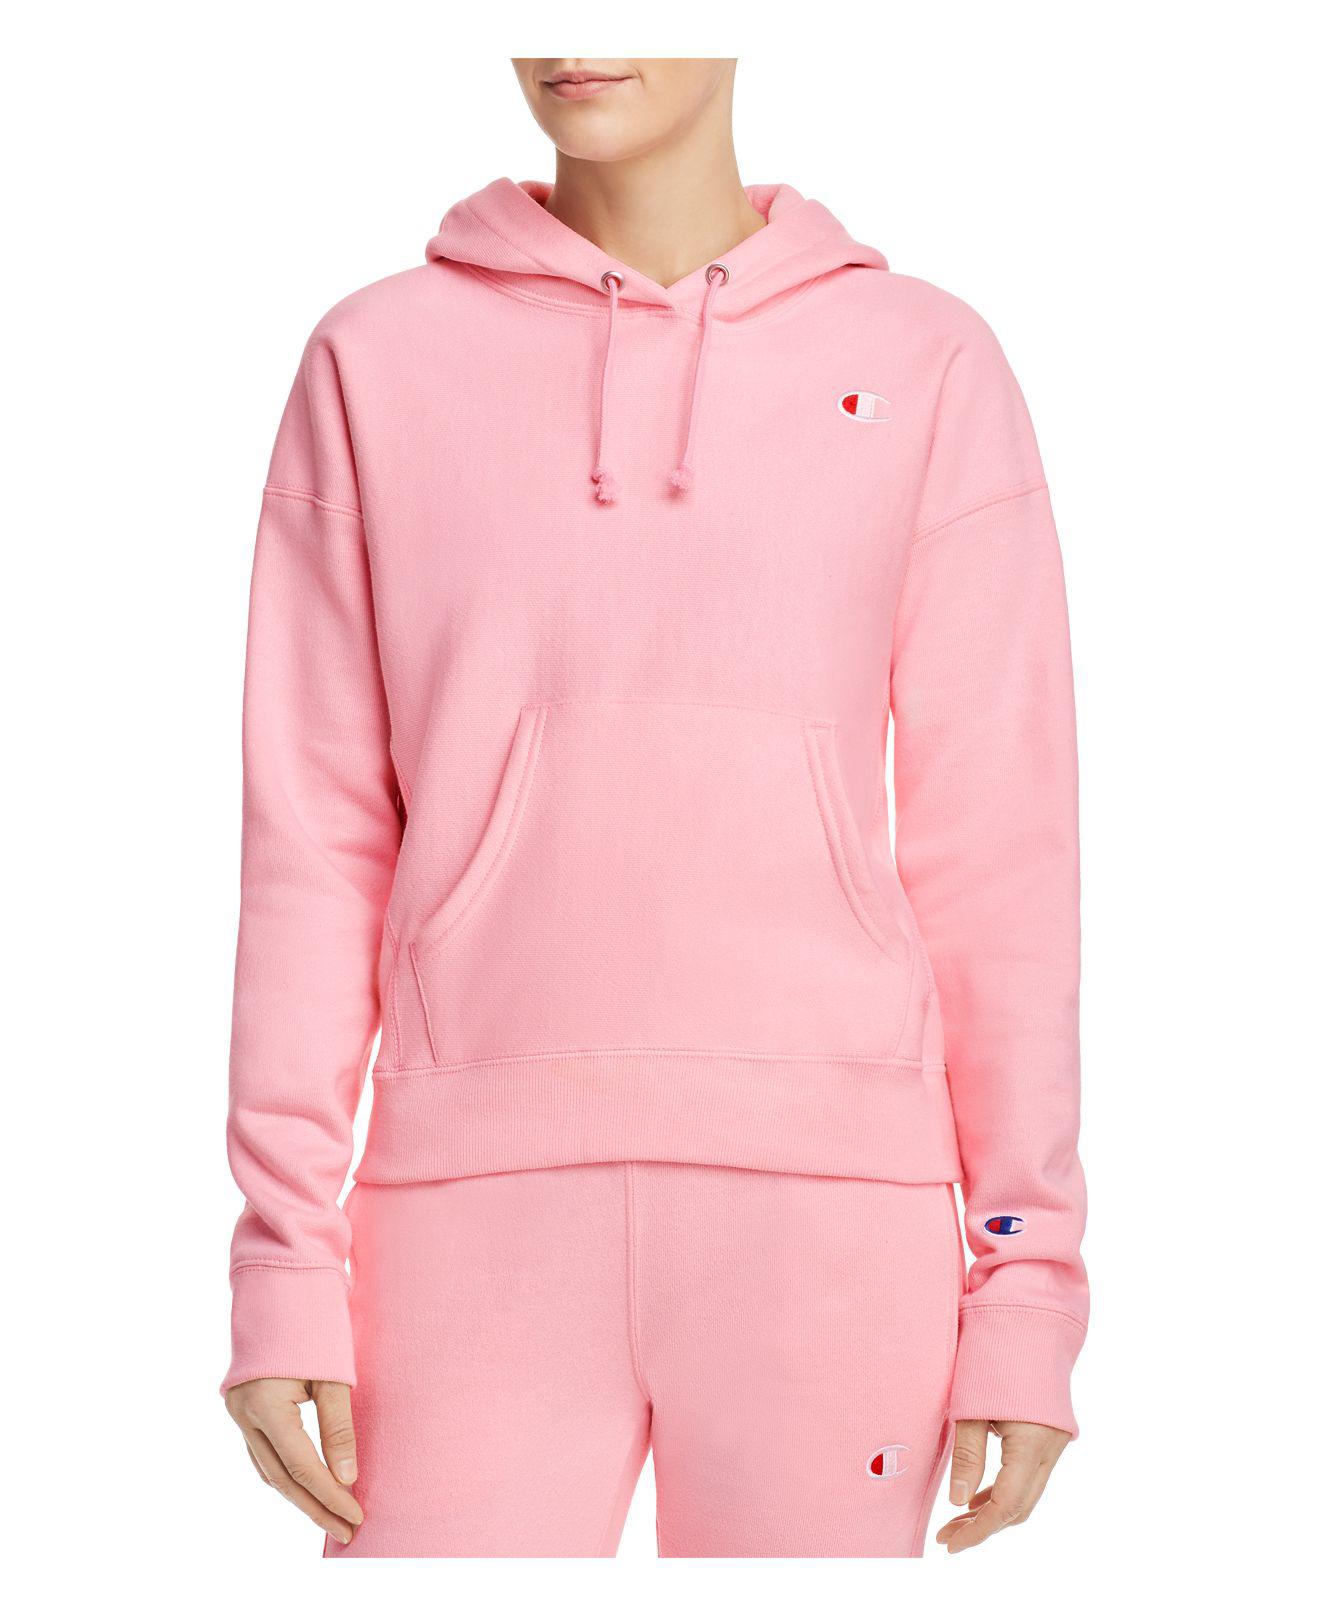 bright pink champion hoodie